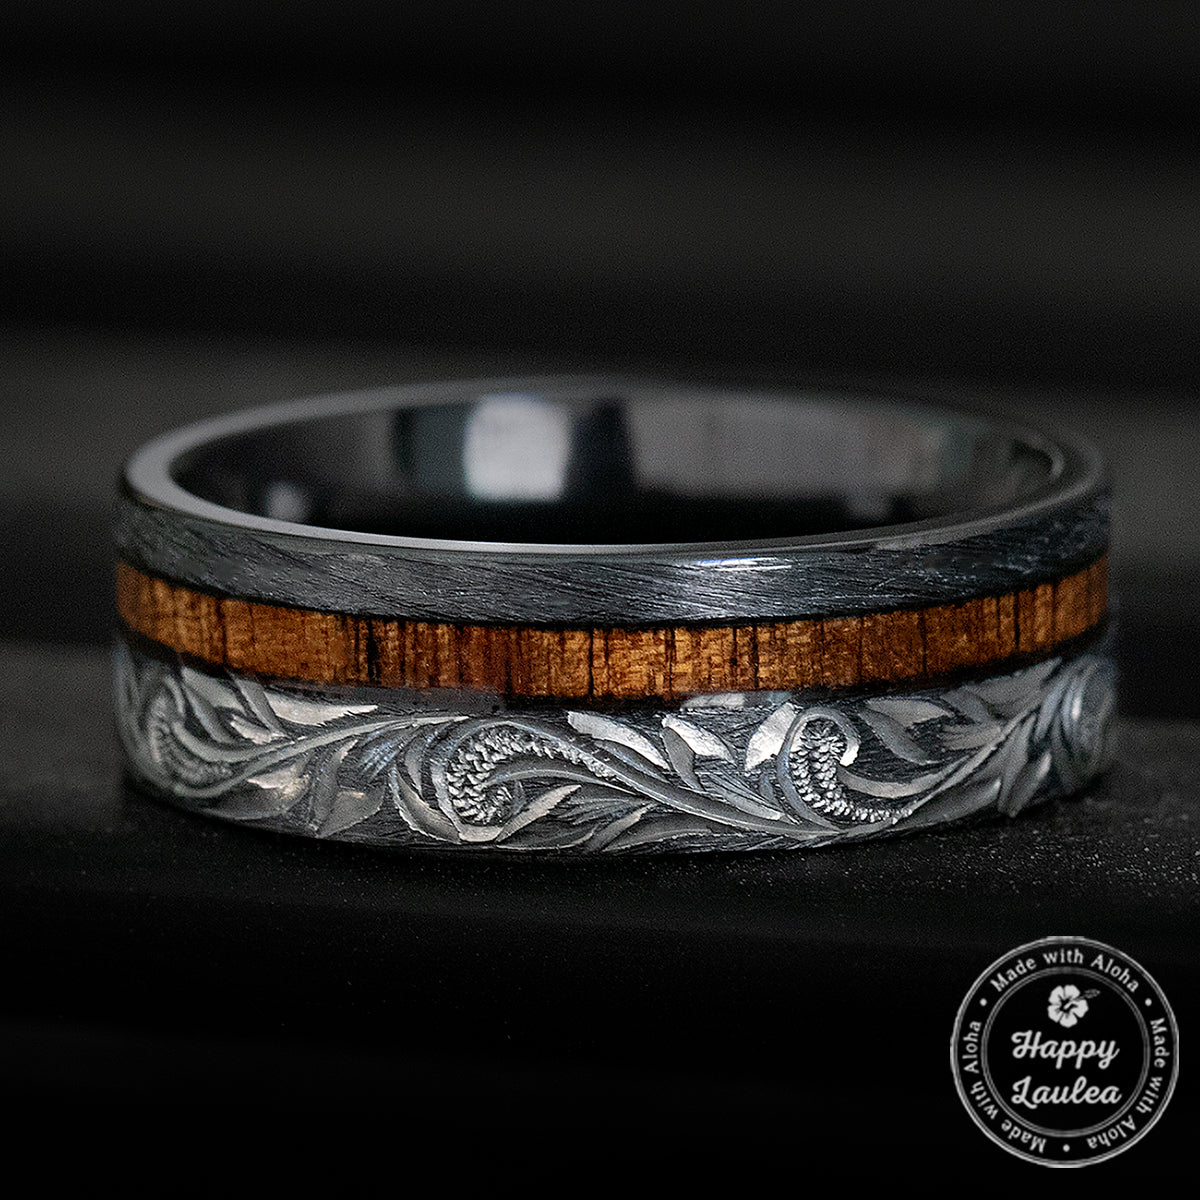 Black Zirconium Hand Engraved Ring [8mm width] Offset Koa Wood Inlay - Flat Shape, Comfort Fitment